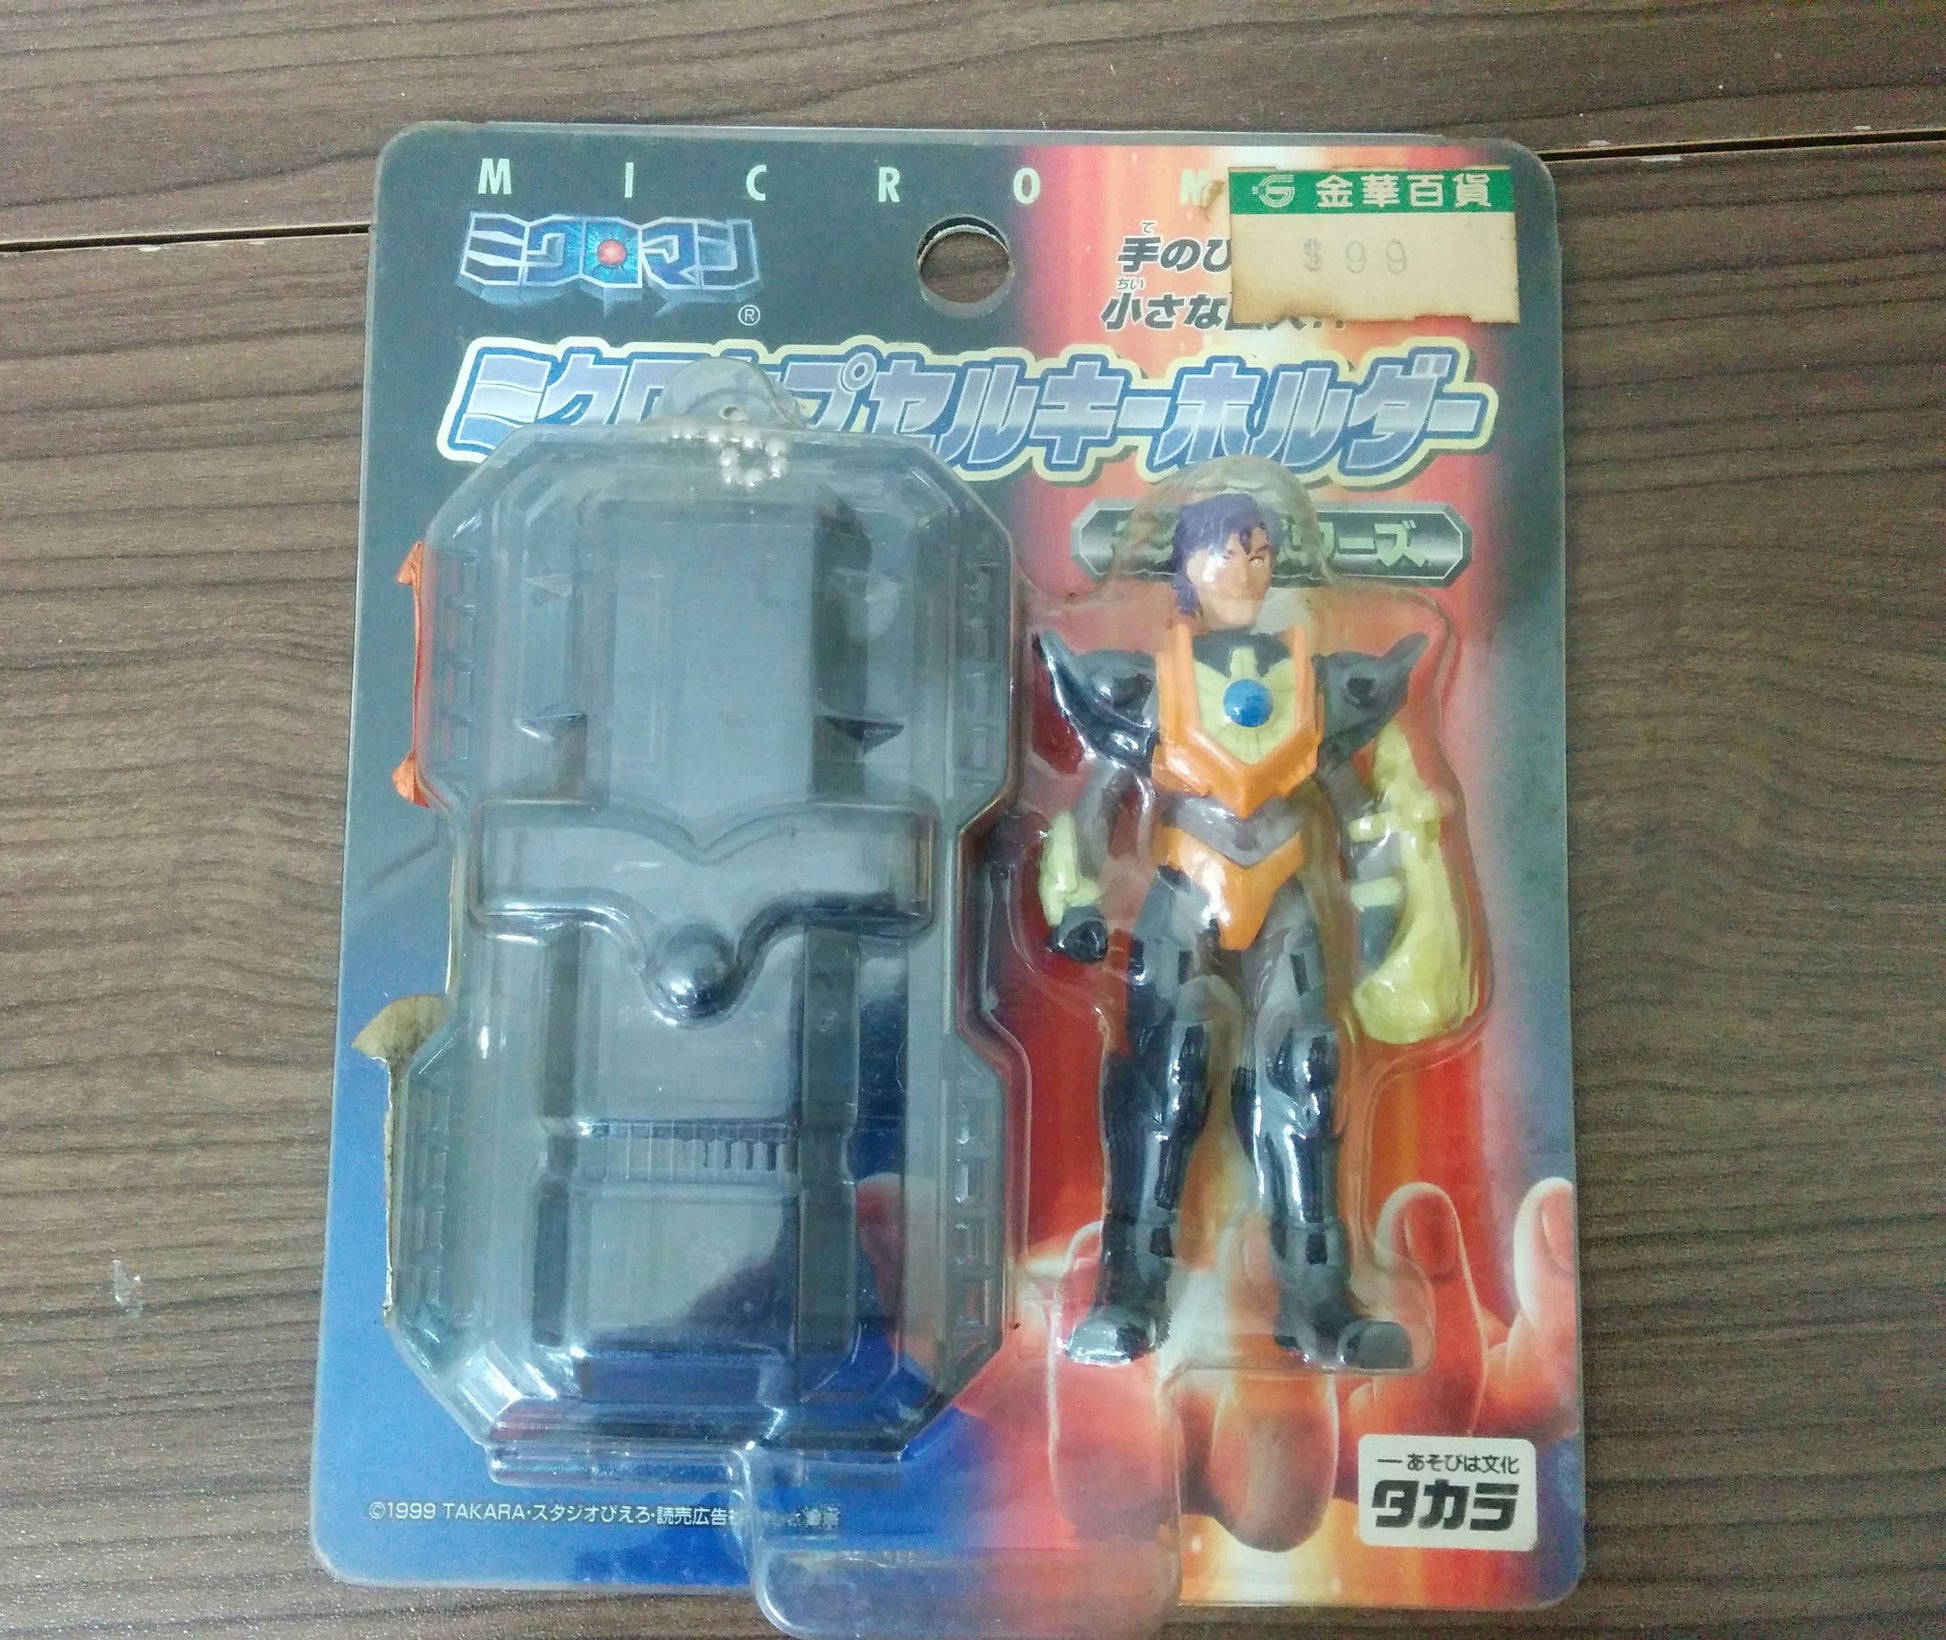 Takara 1999 Microman UFO Prize Anime style Magne Power Capsule Keychain Odin Ver Pvc Action Figure - Lavits Figure
